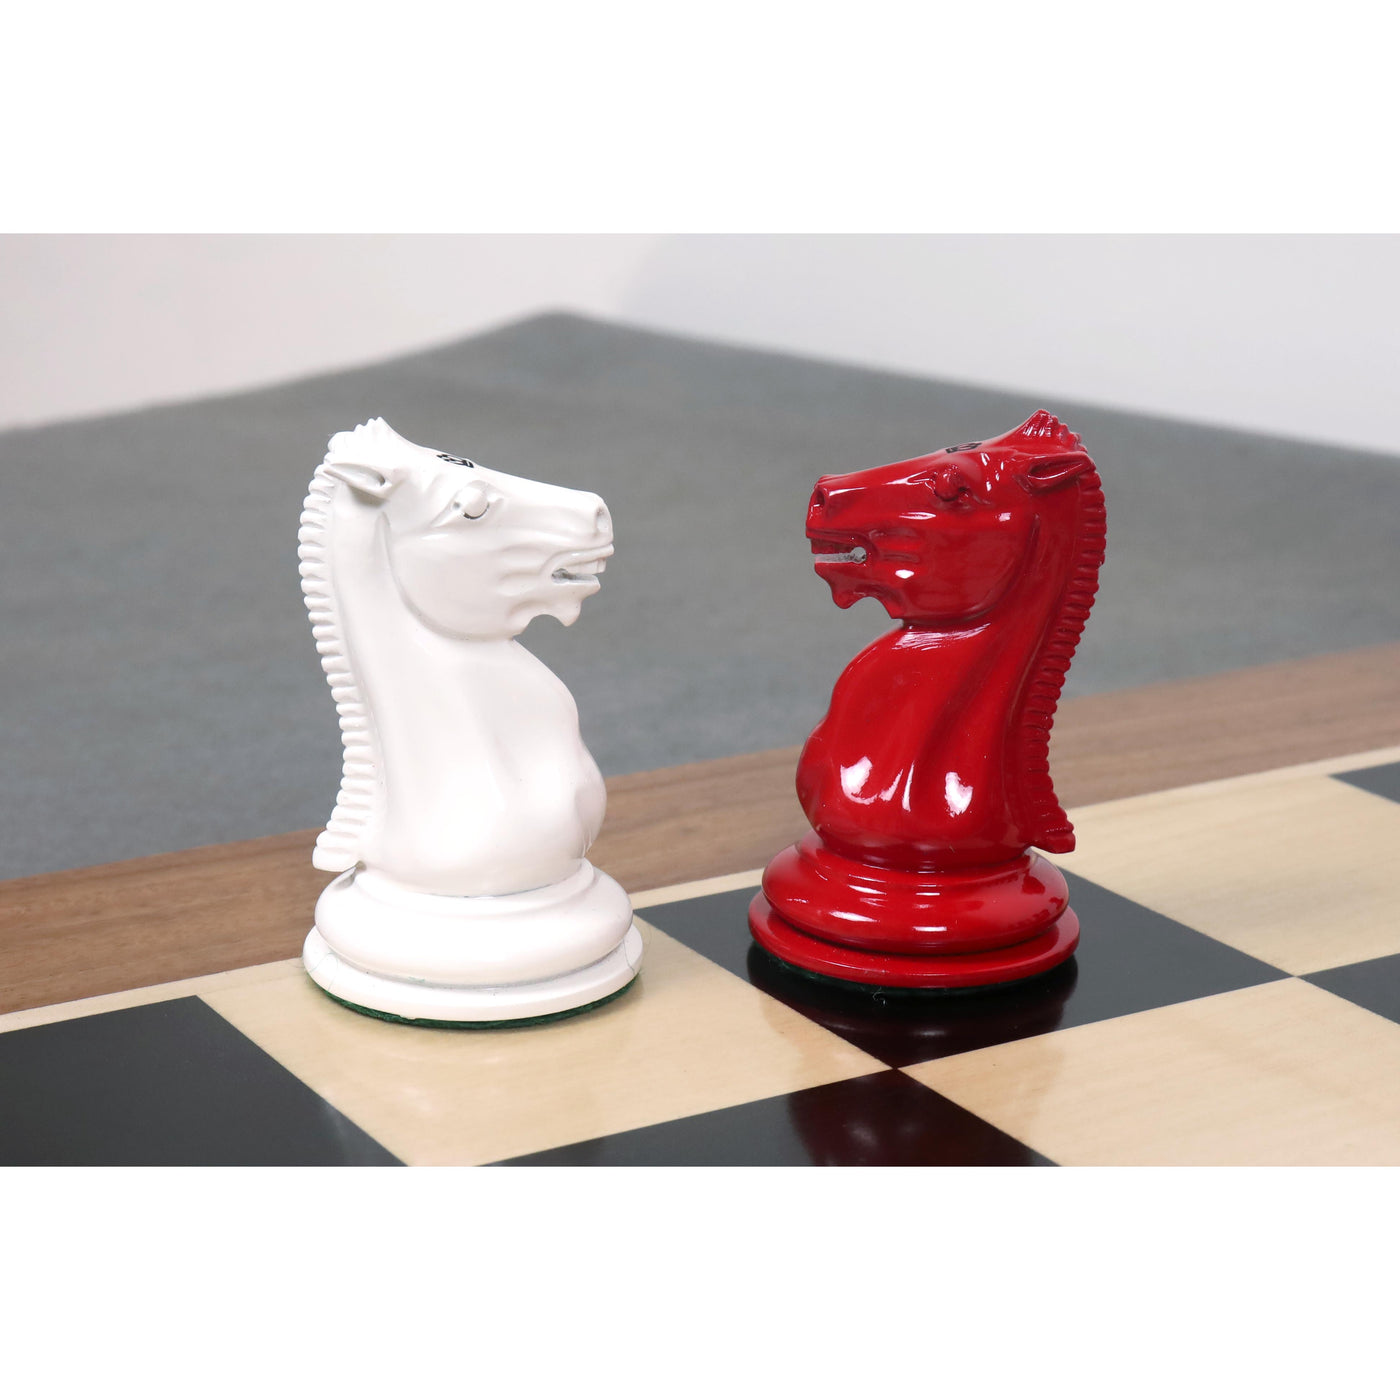 Camel Bone Chess Pieces Only Set | unique chess set | luxury chess pieces